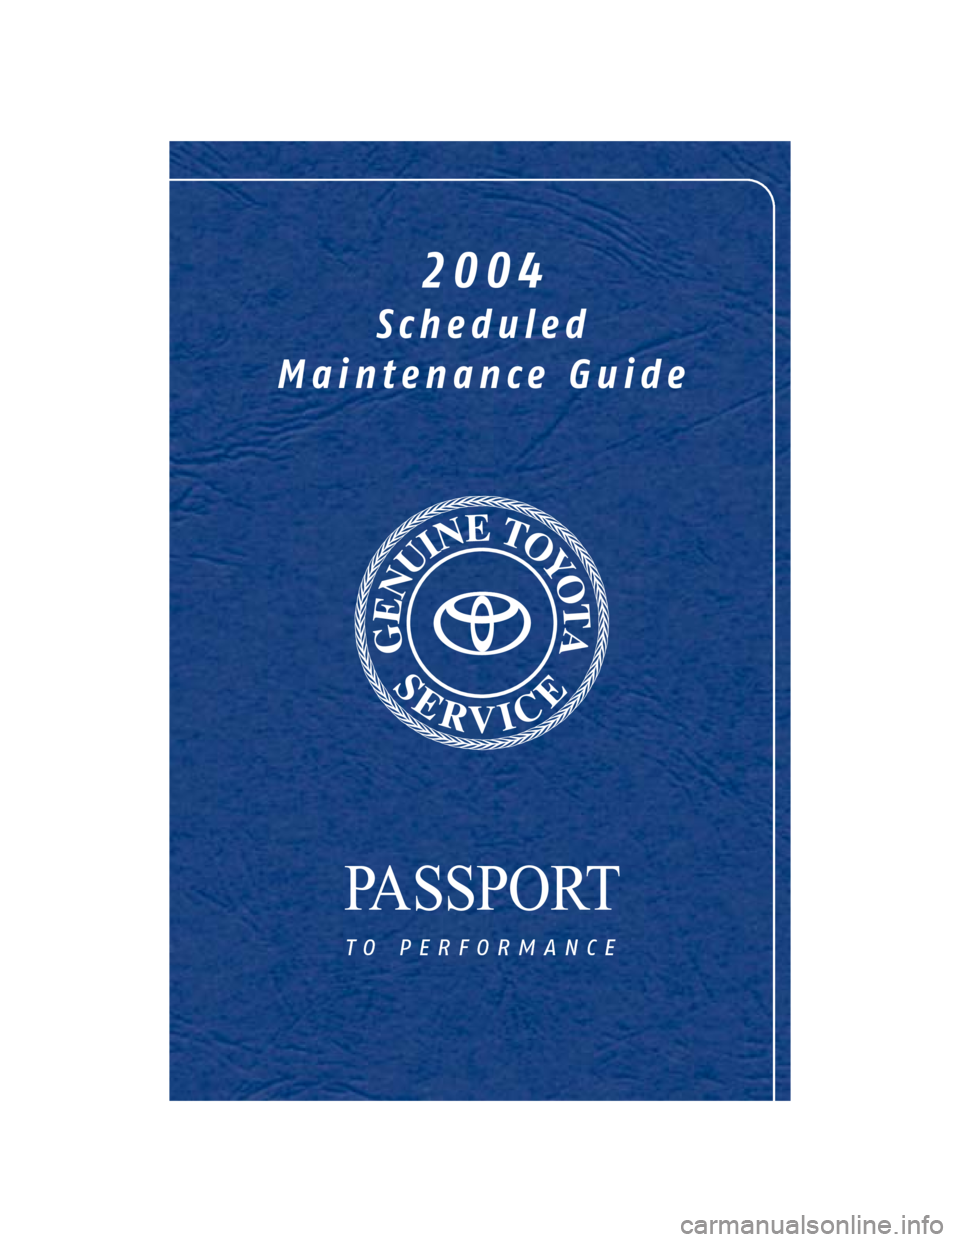 TOYOTA LAND CRUISER 2004 J100 Scheduled Maintenance Guide PASSPORT
to performance
2004
Scheduled
Maintenance Guide 